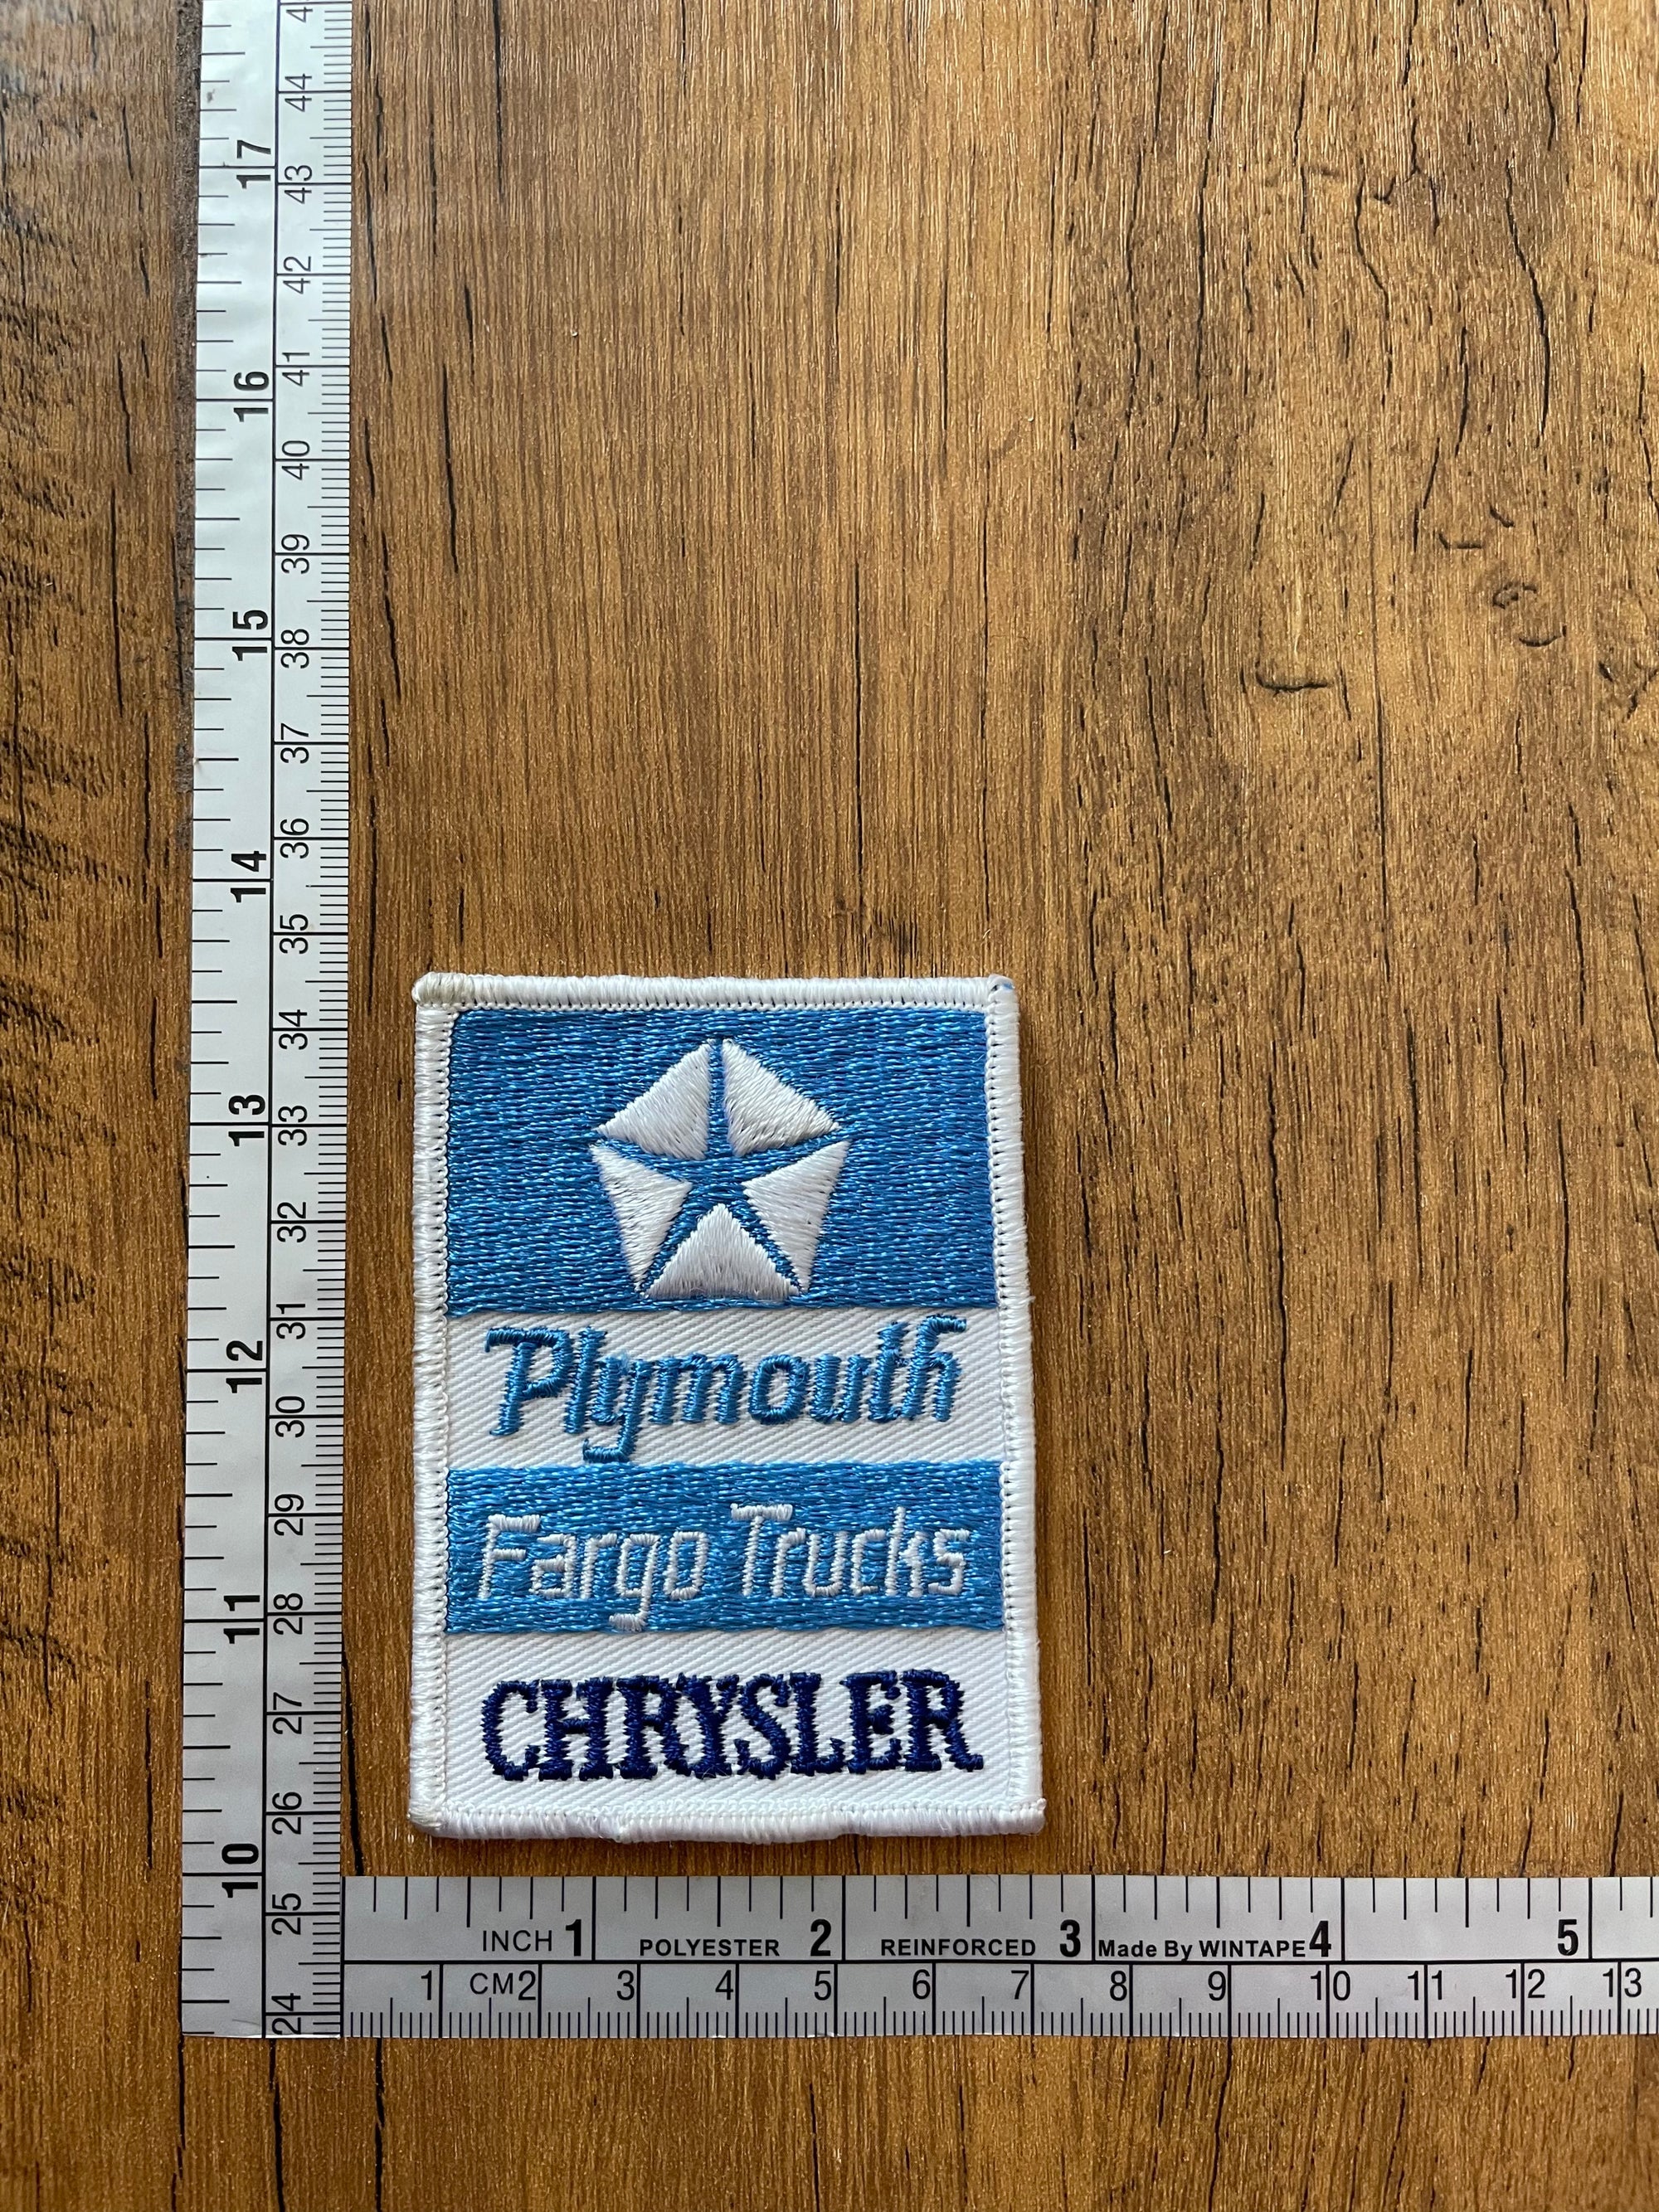 Vintage Plymouth Fargo Trucks Chrysler